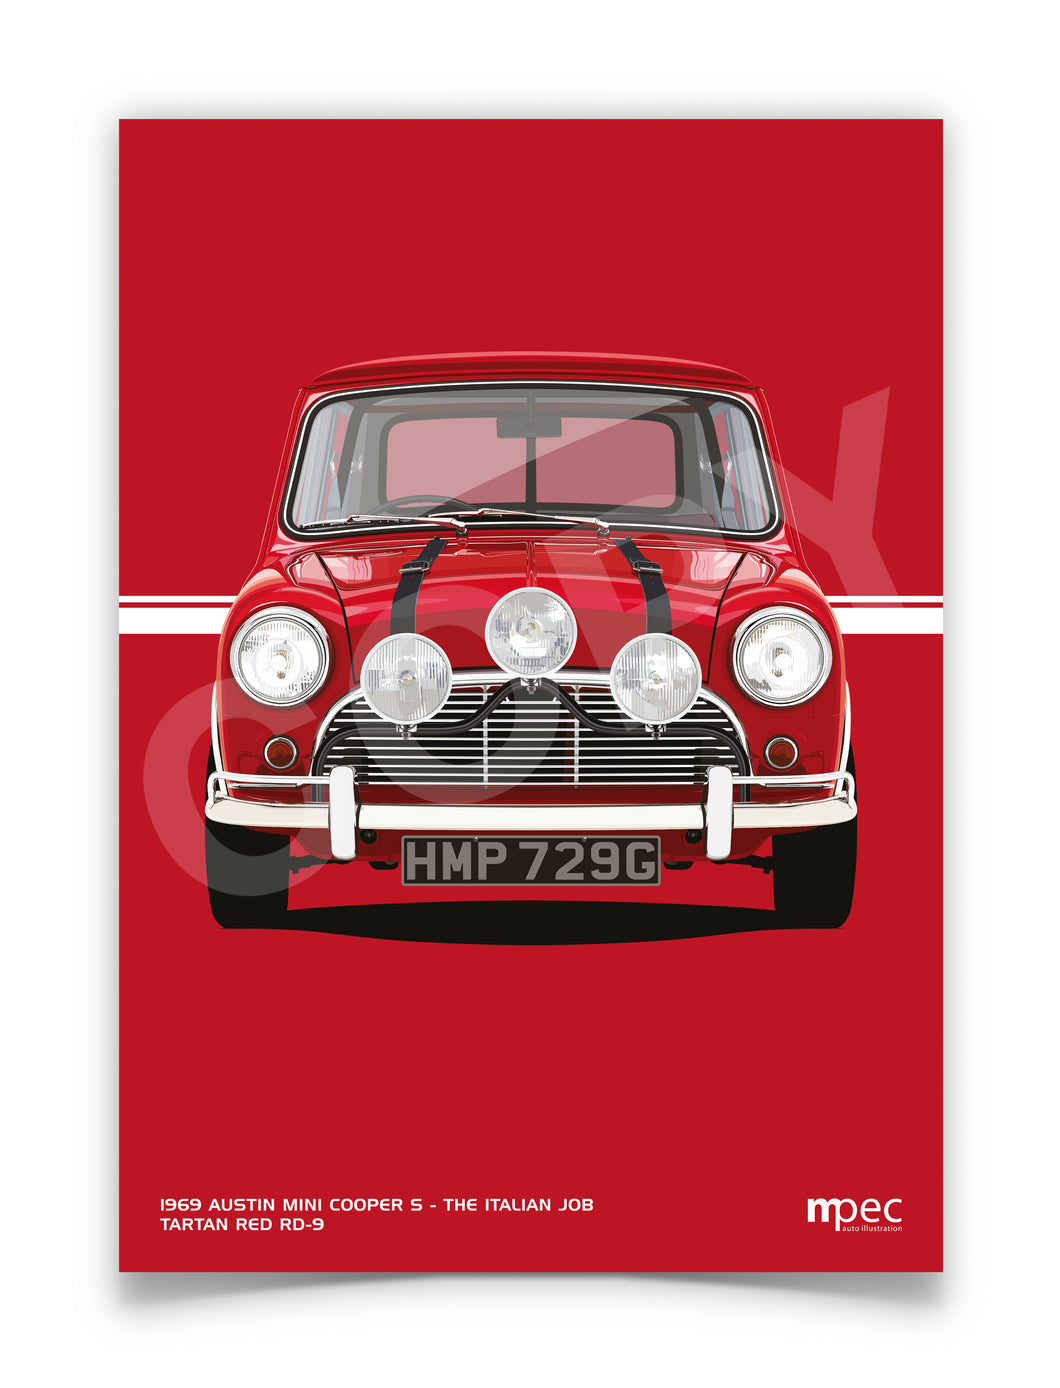 Illustration The Italian Job 1969 Austin Mini Cooper S - Red